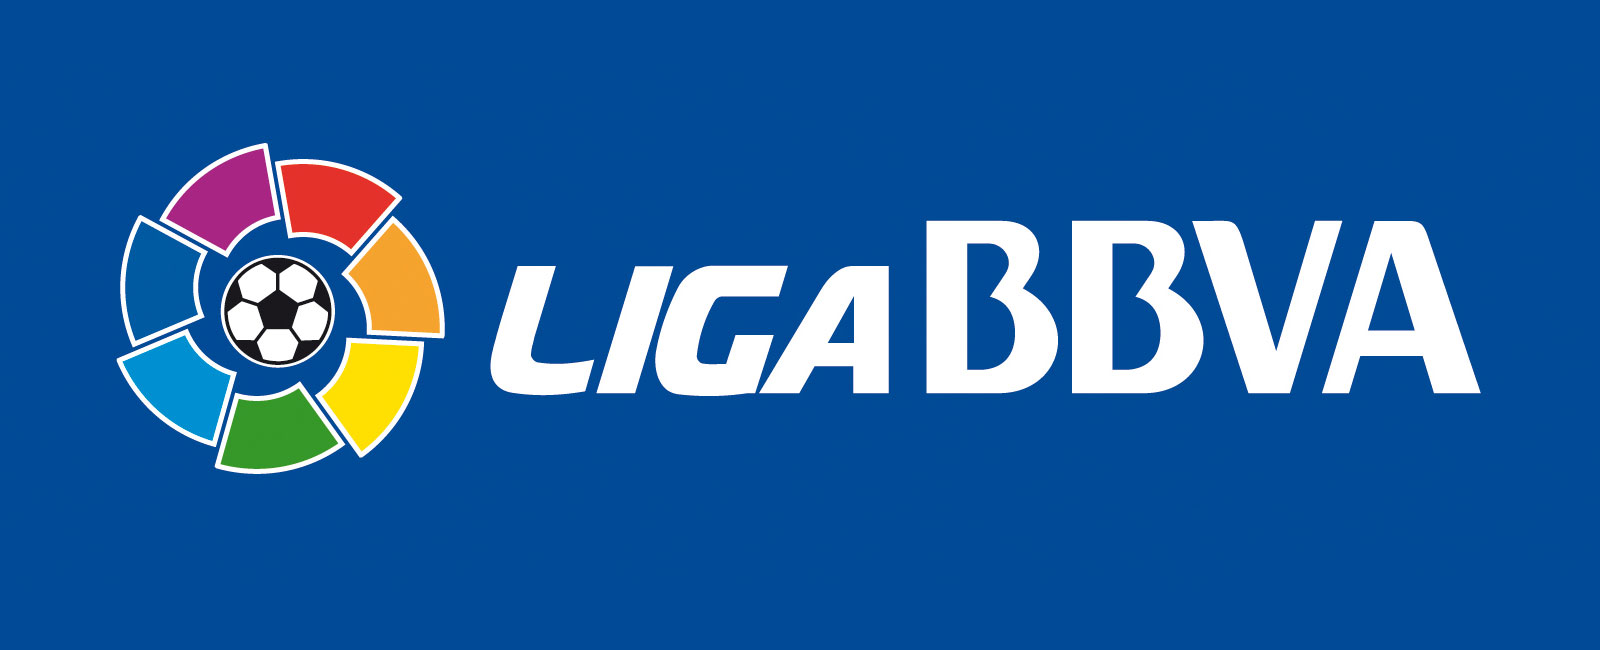 BBVA Ends La Liga Name Sponsorship - Footy Headlines